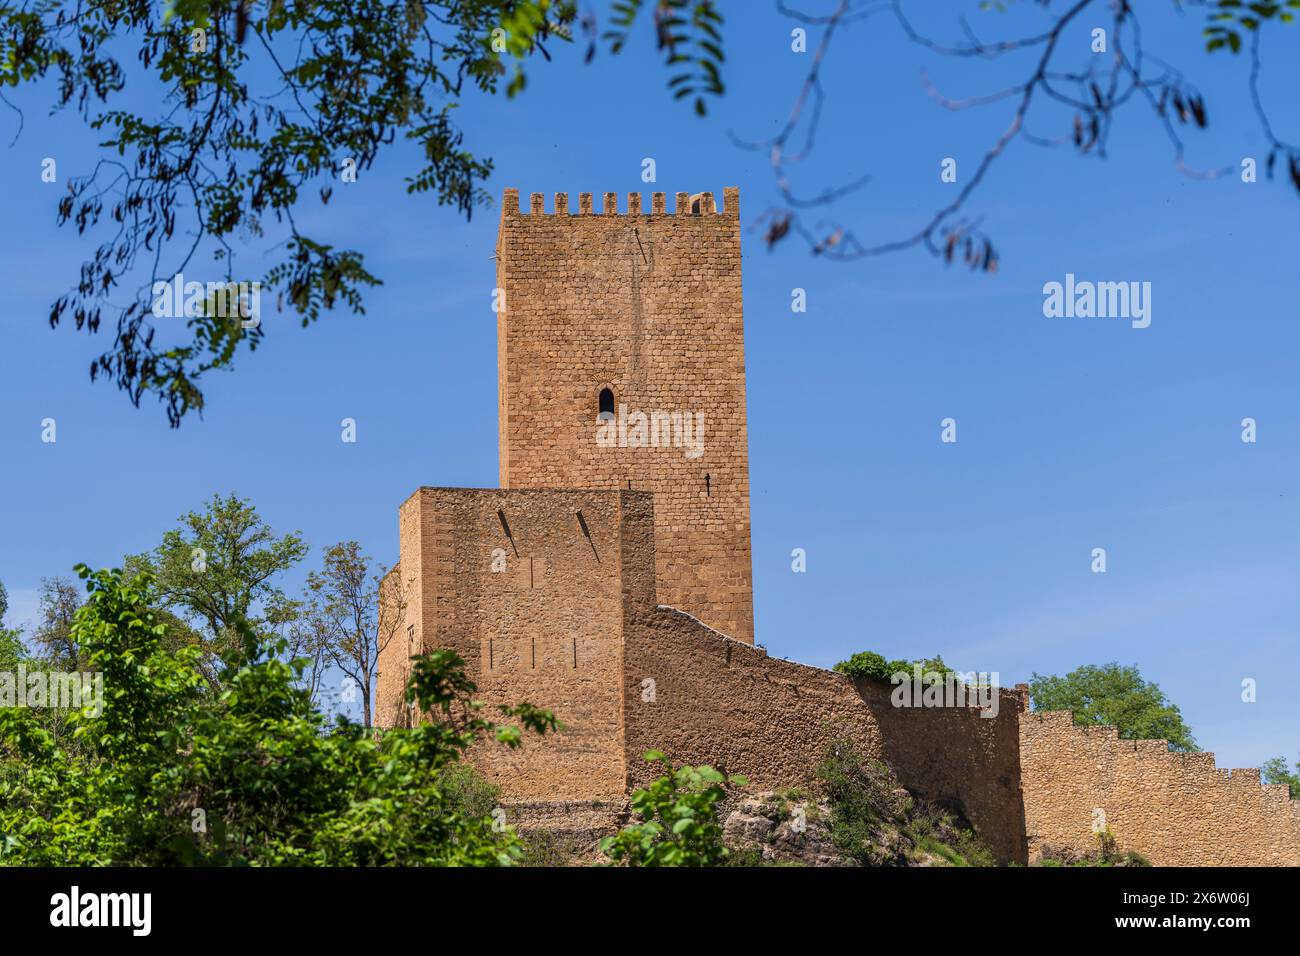 Castillo de la Yedra - castle of the Four Corners- Cazorla town, Natural Park of the Sierras de Cazorla, Segura and Las Villas, Jaén province, Andalusia, Spain. Stock Photo